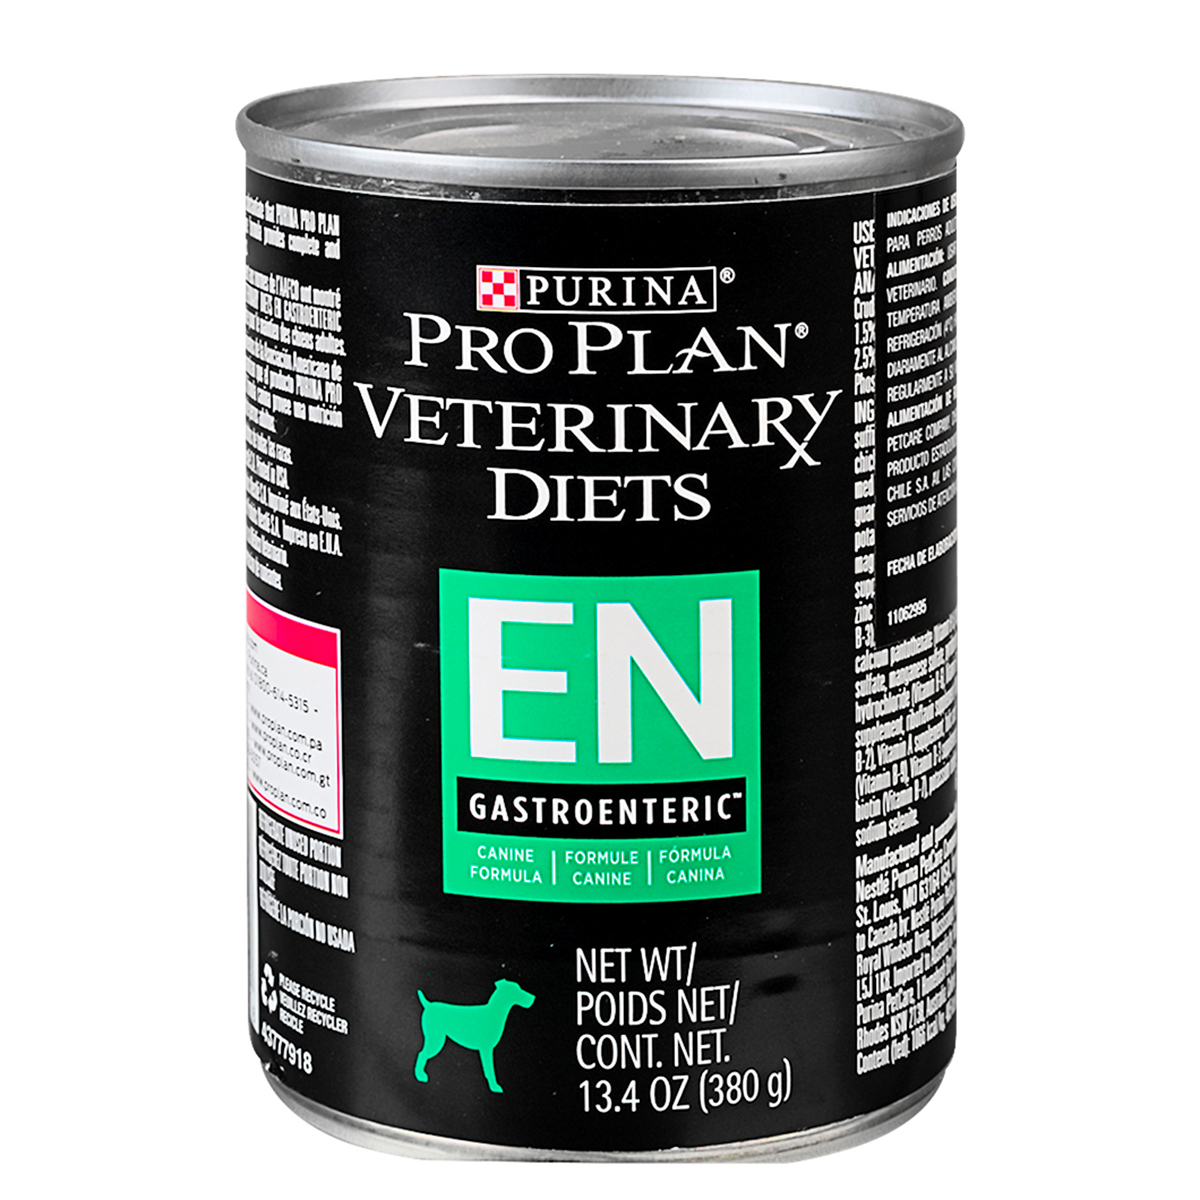 Pro Plan Veterinary Diets en Gastroenteric Lata para Perro